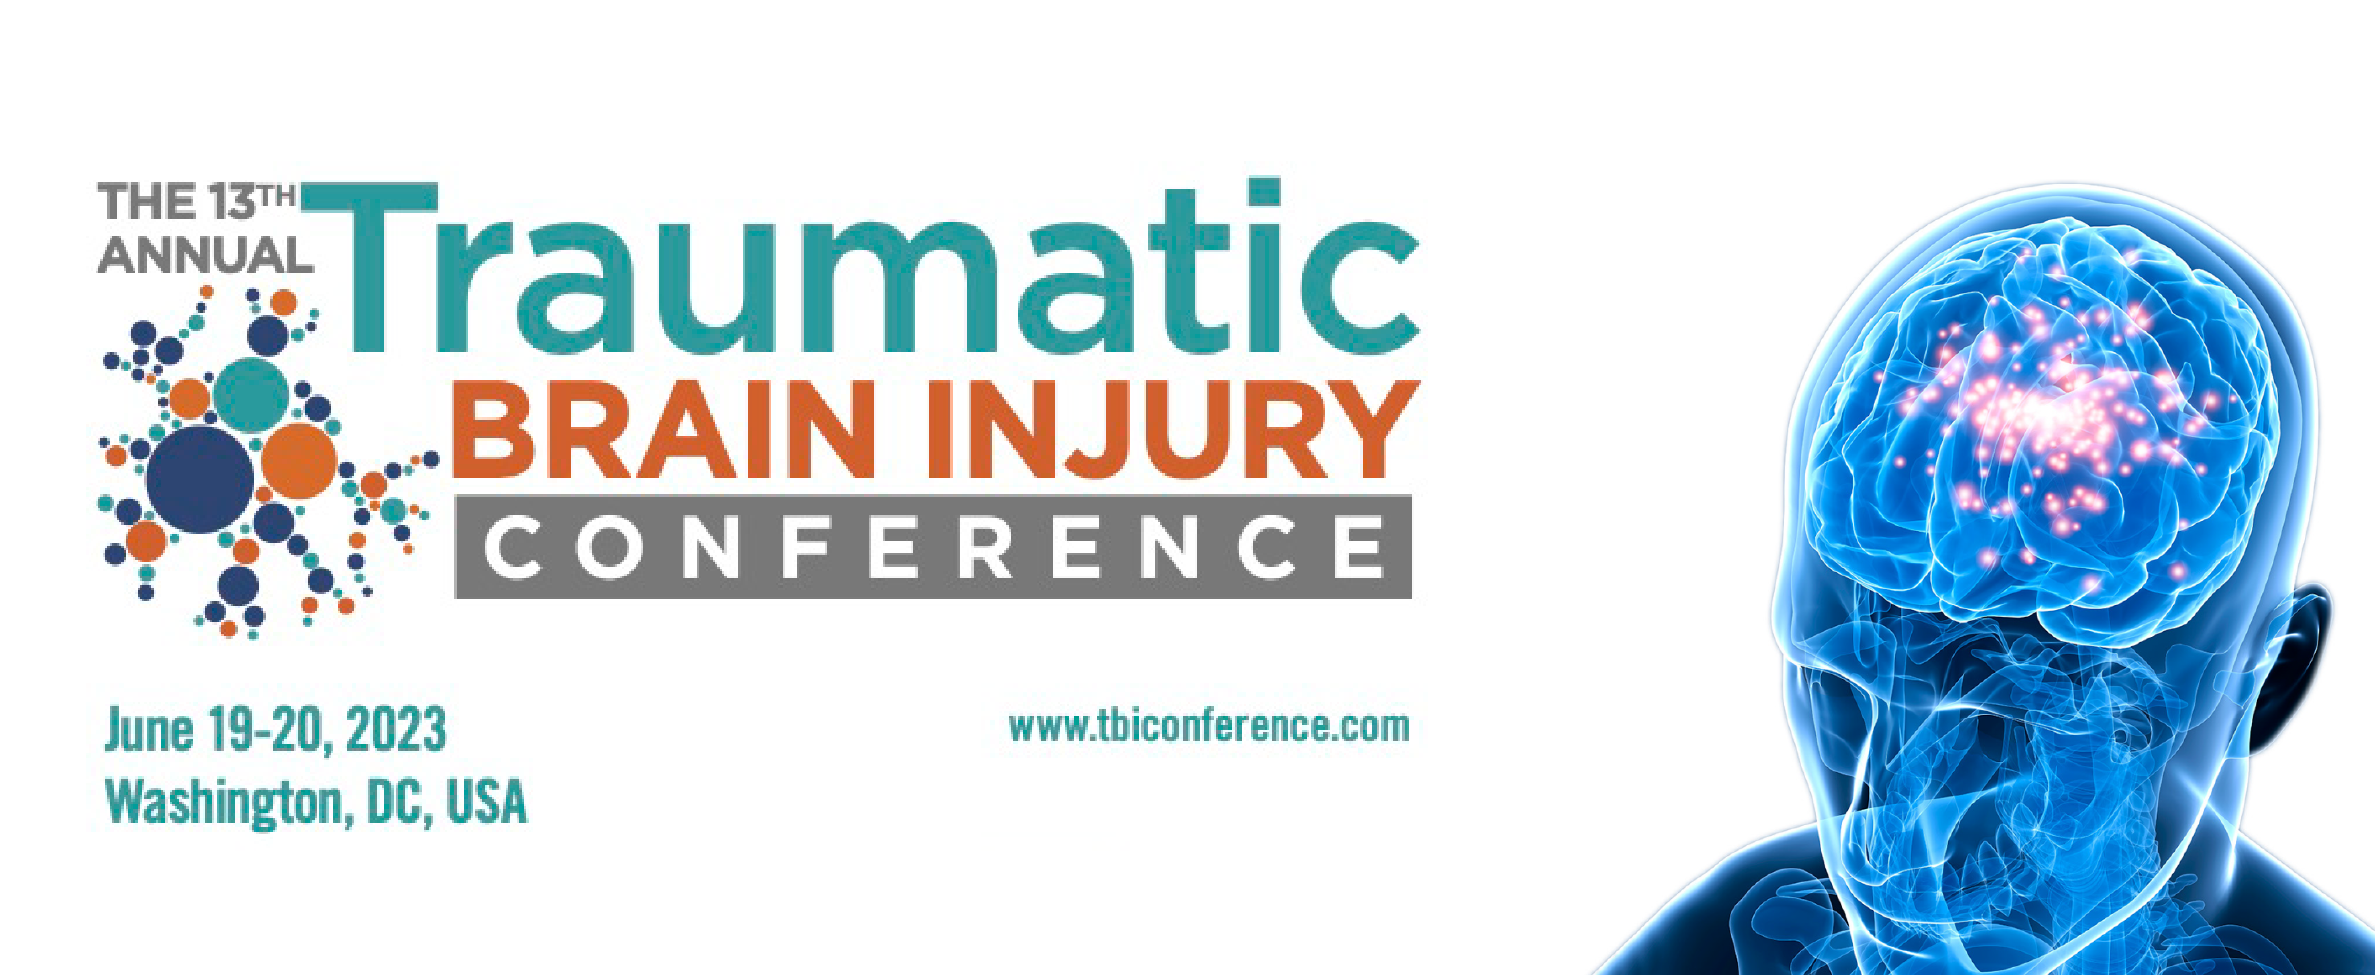 13th Annual Traumatic Brain Injury Conference - TBI 2023